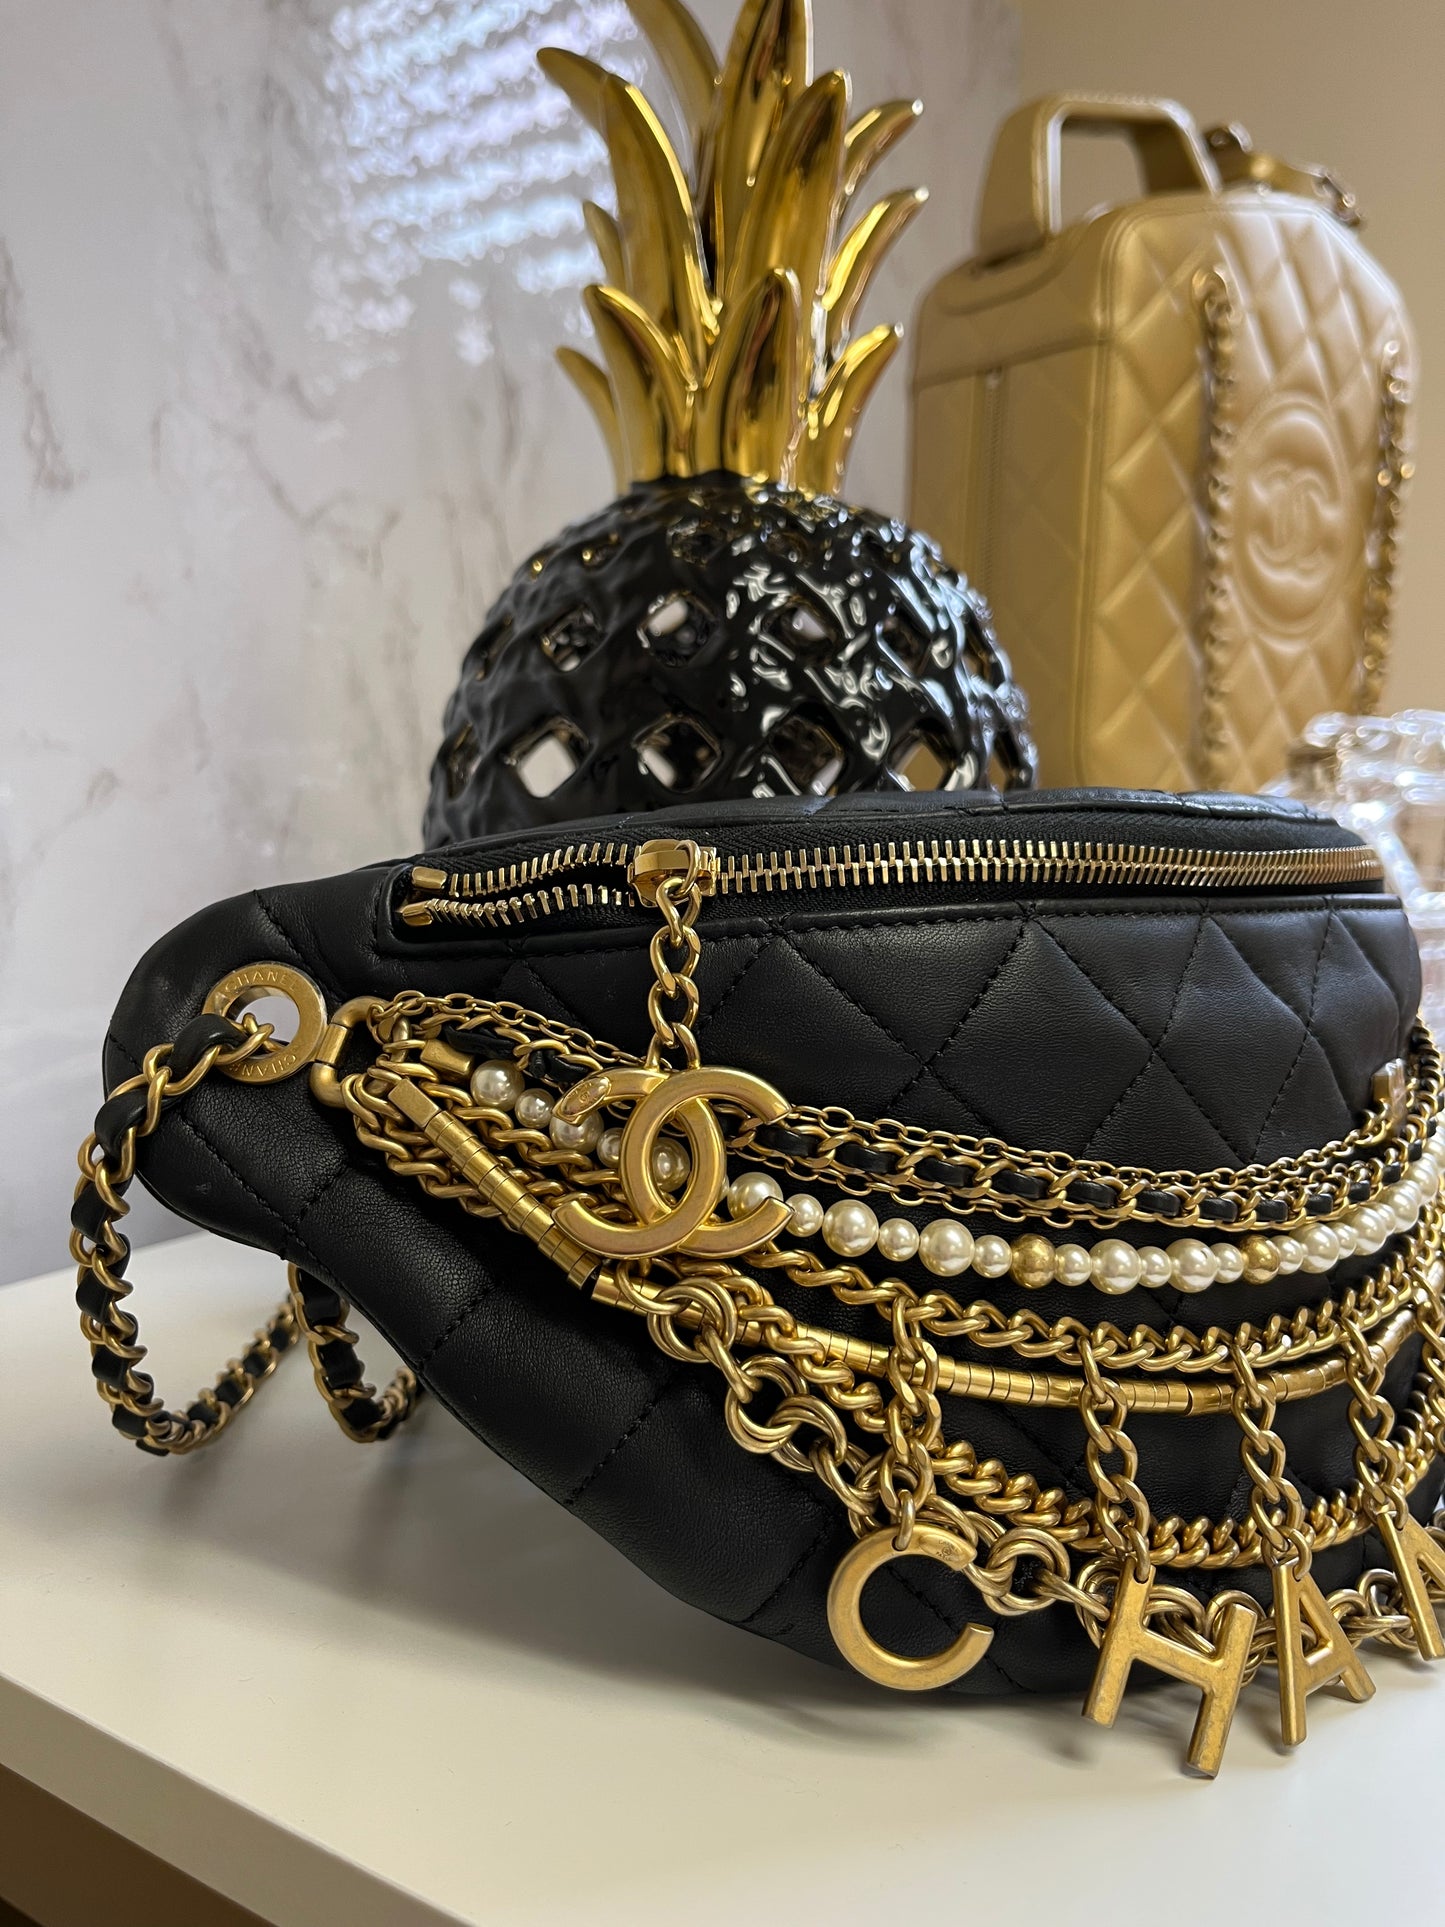 Monochrome Outfit - Handbag Inspo - Chanel Chain Belt Bag - Chanel Belt Bag  - Mini Chanel Bag - Brown Chanel Bag - 2018 Trends - N…